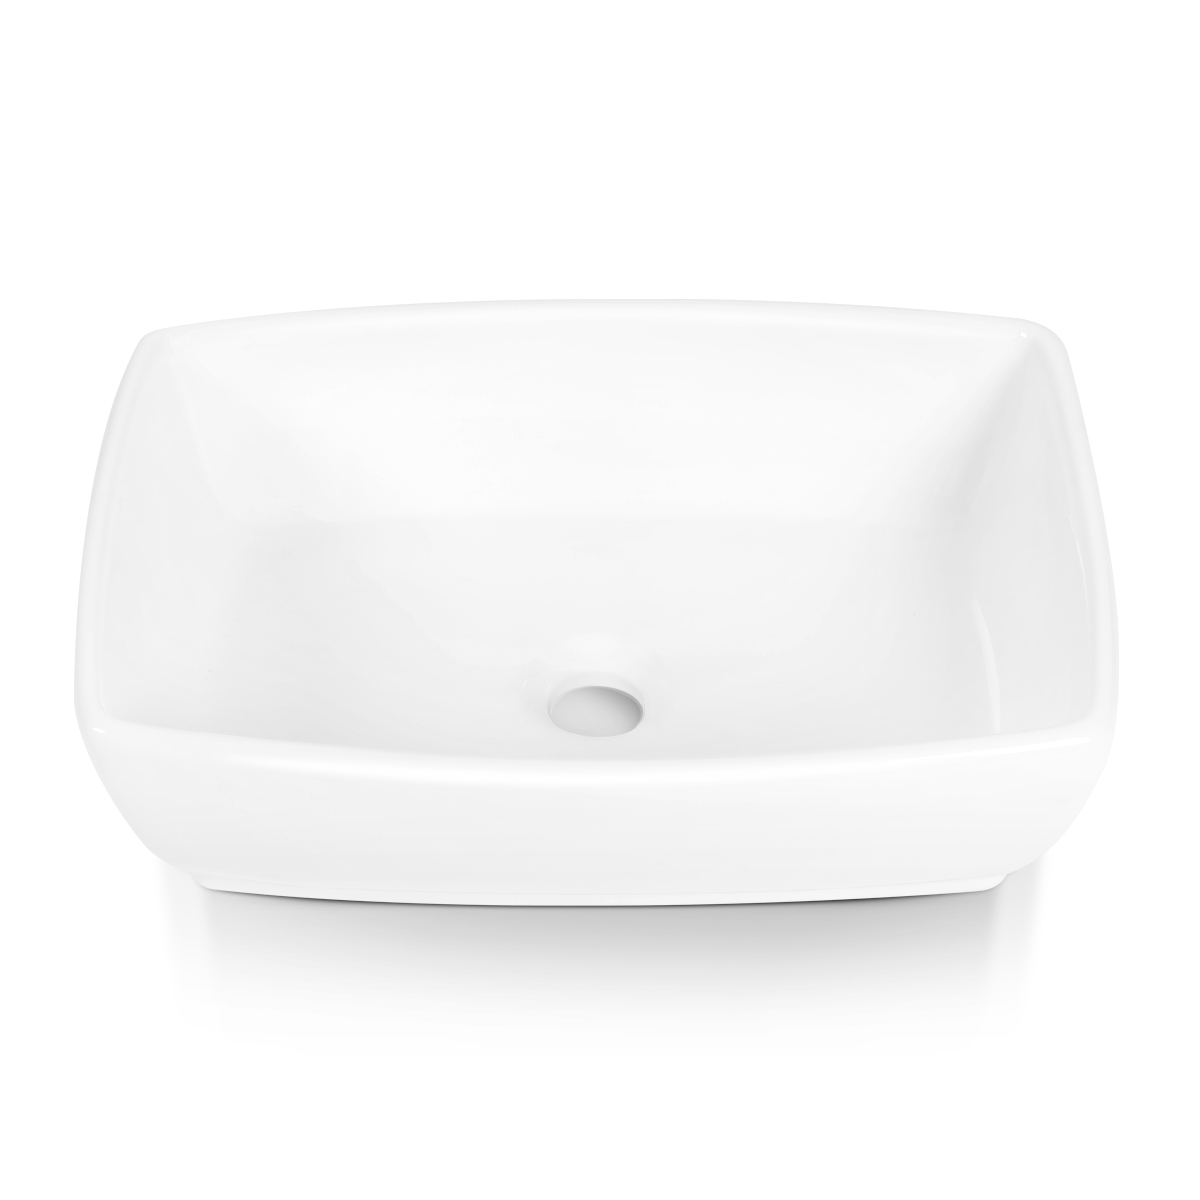 Duko BVS1914A-OL 19" x 14" White Rectangular Ceramic Countertop Bathroom Vanity Vessel Sink